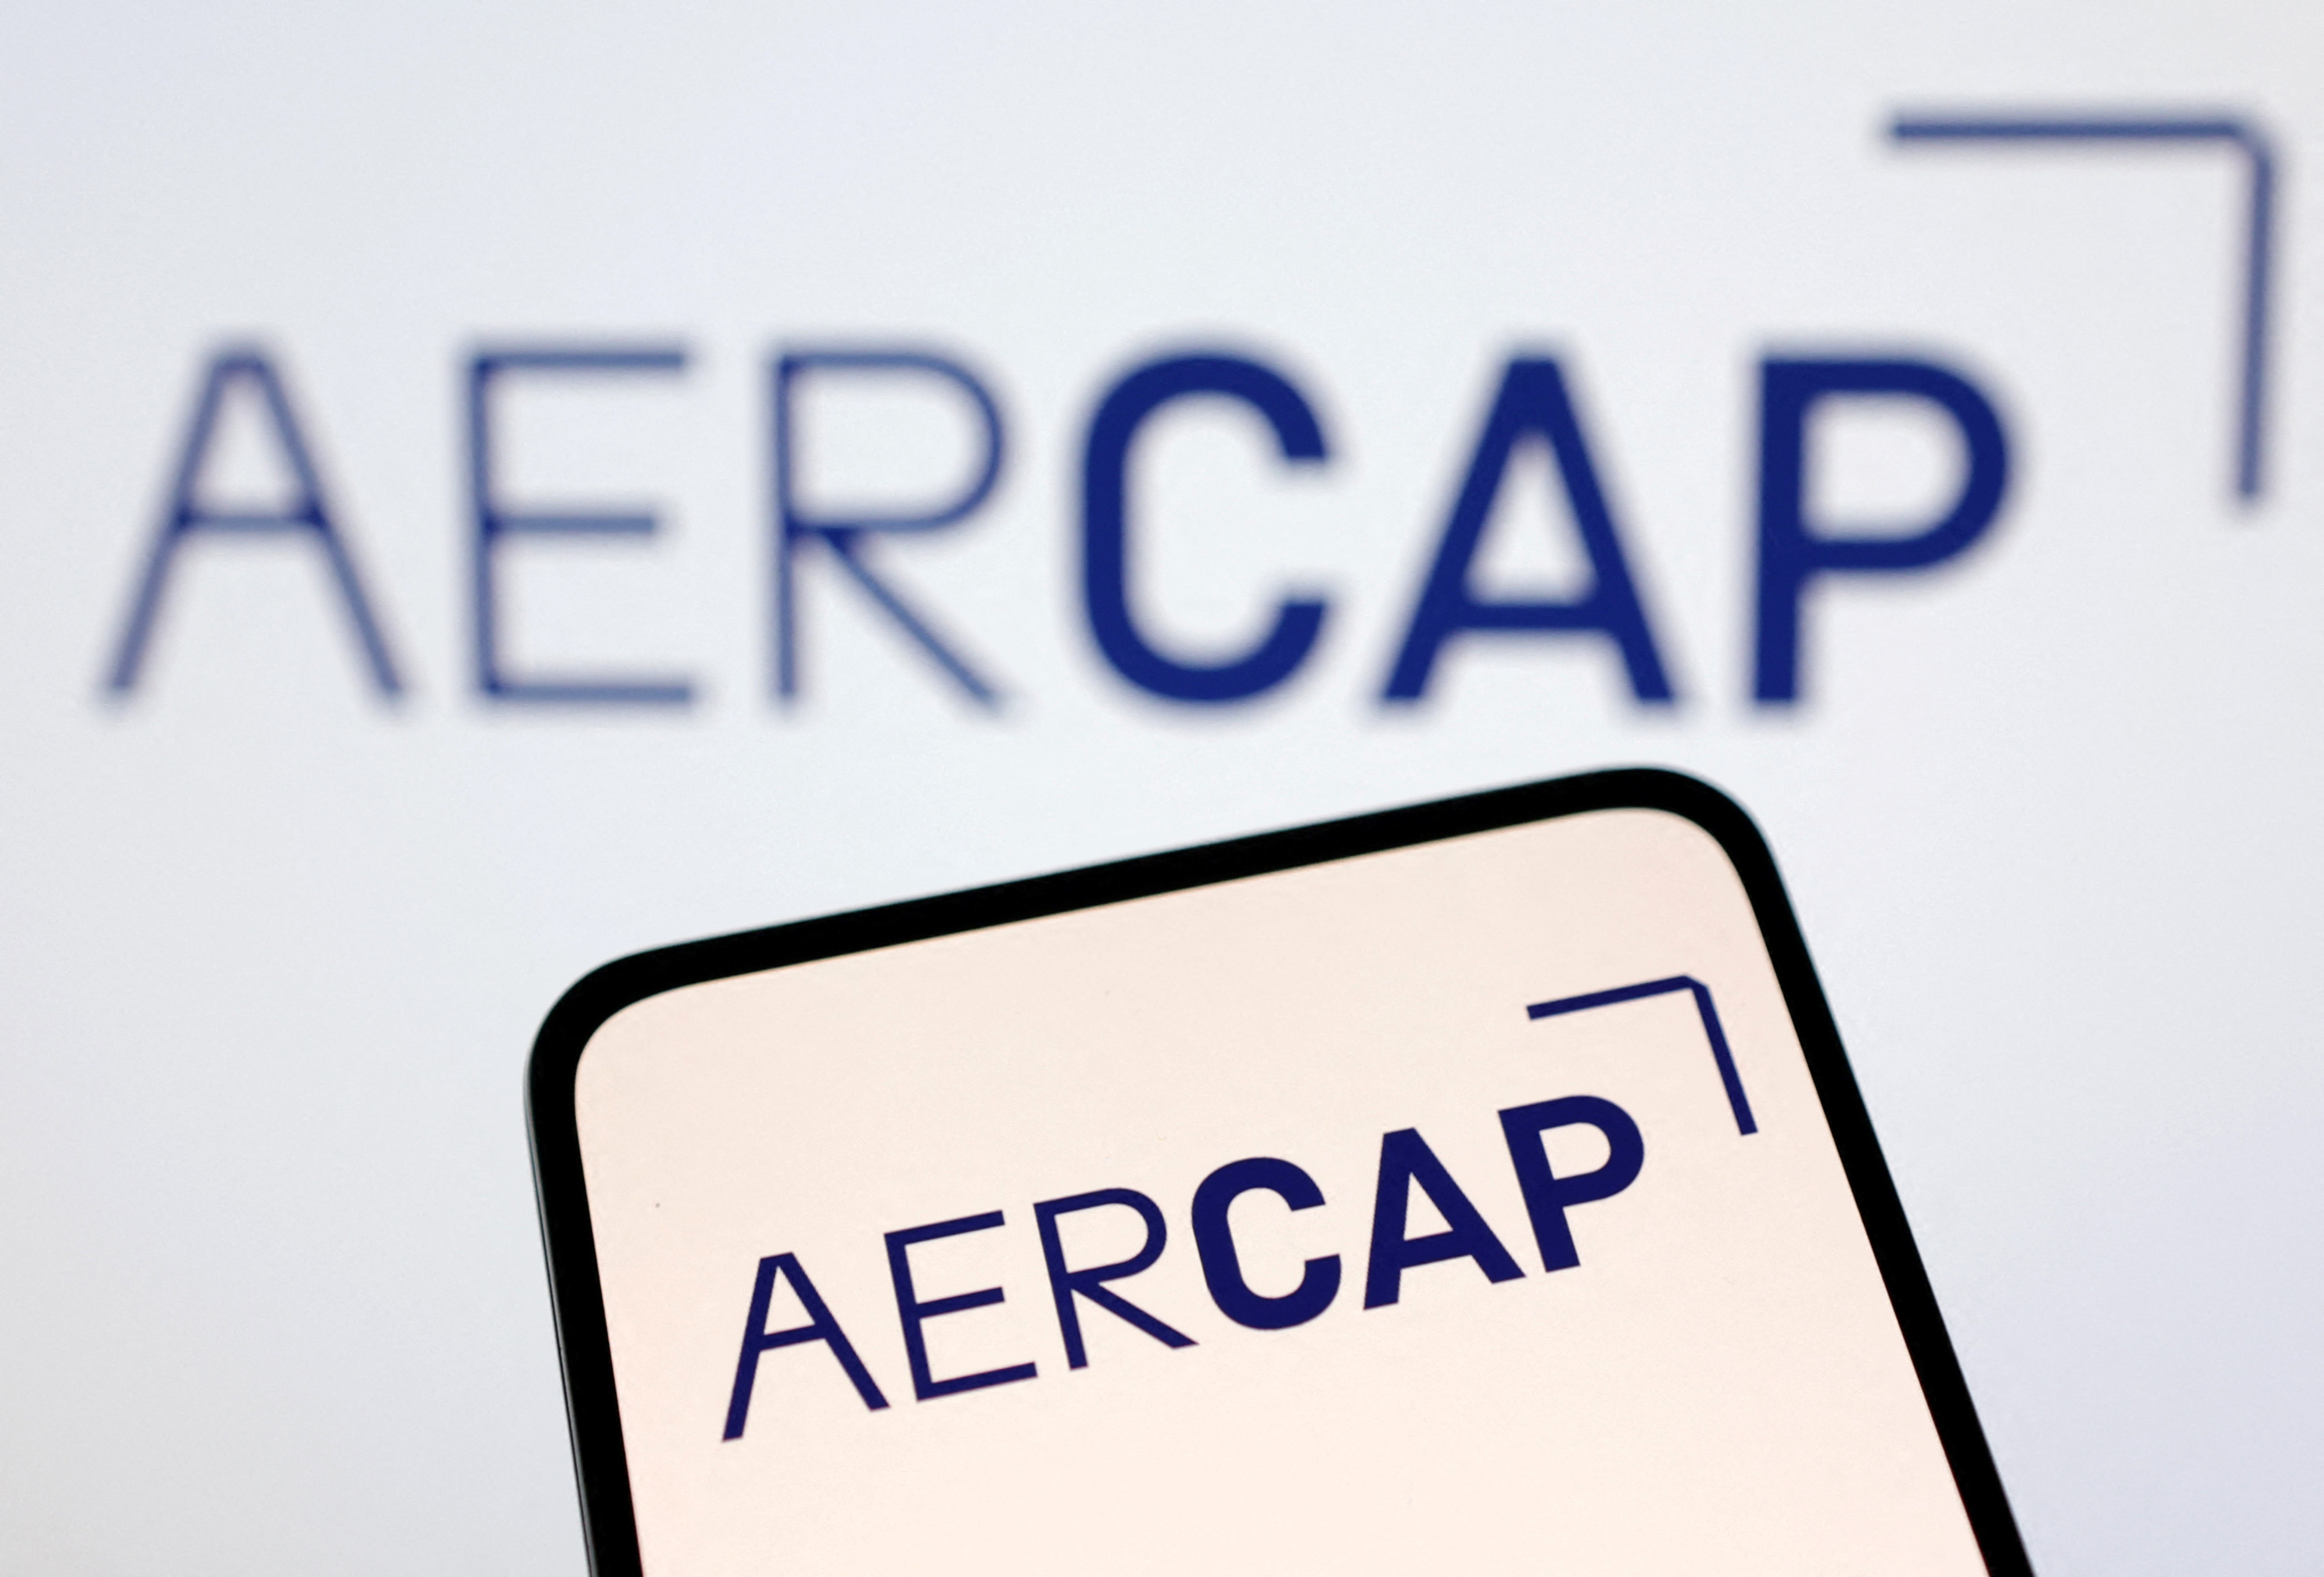 Illustration shows AerCap logo